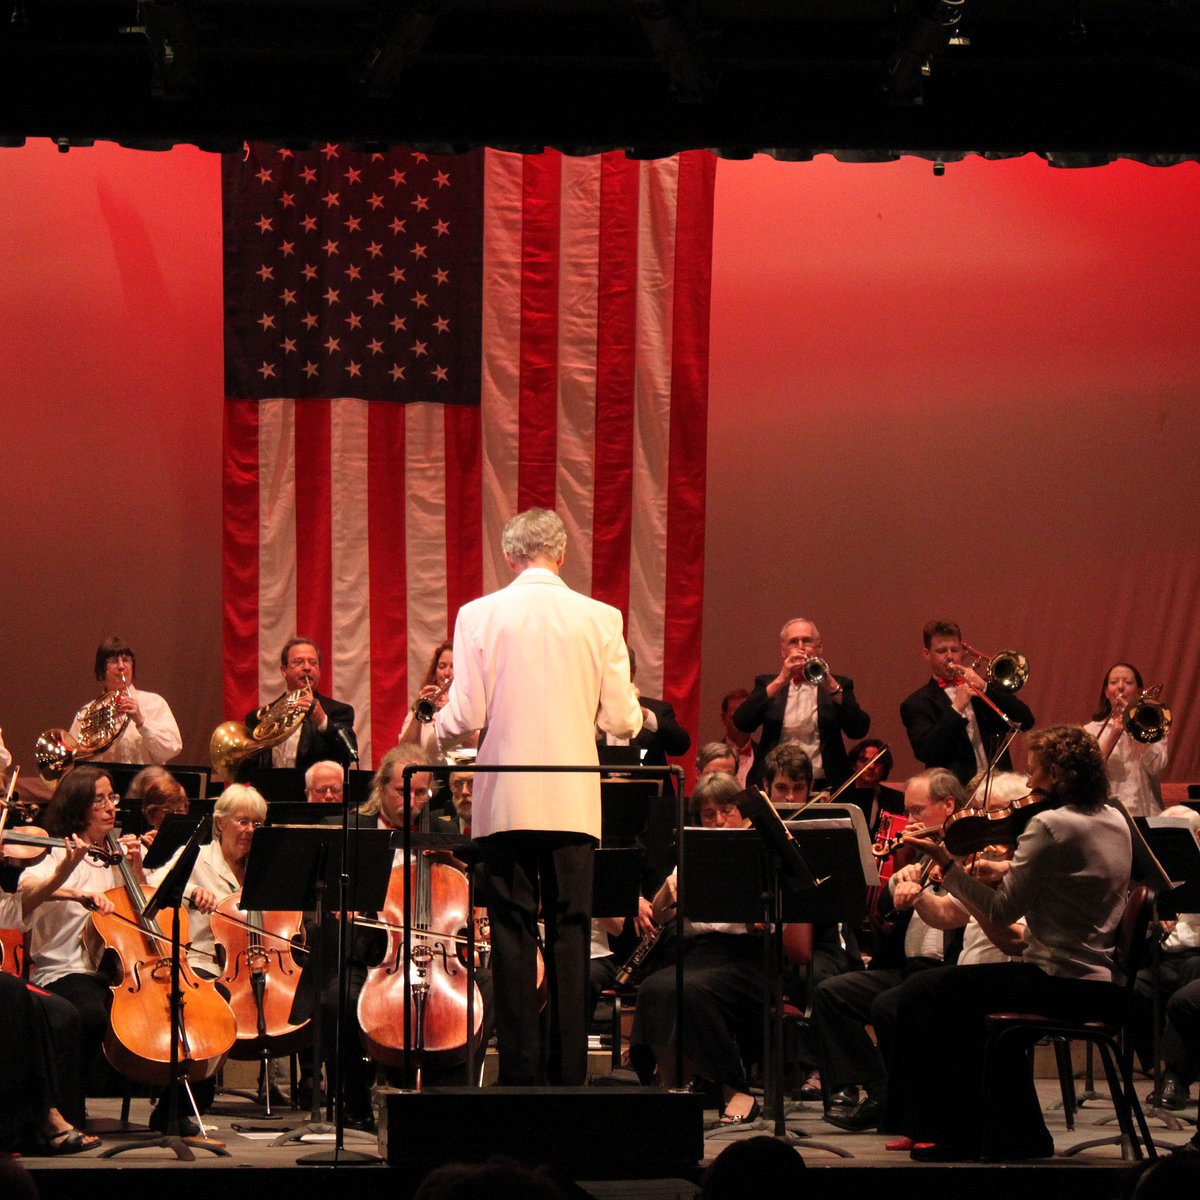 Concord Orchestra. Concord Orchestra участники фото. Leon Pops Orchestra фото. Concord orchestra отзывы